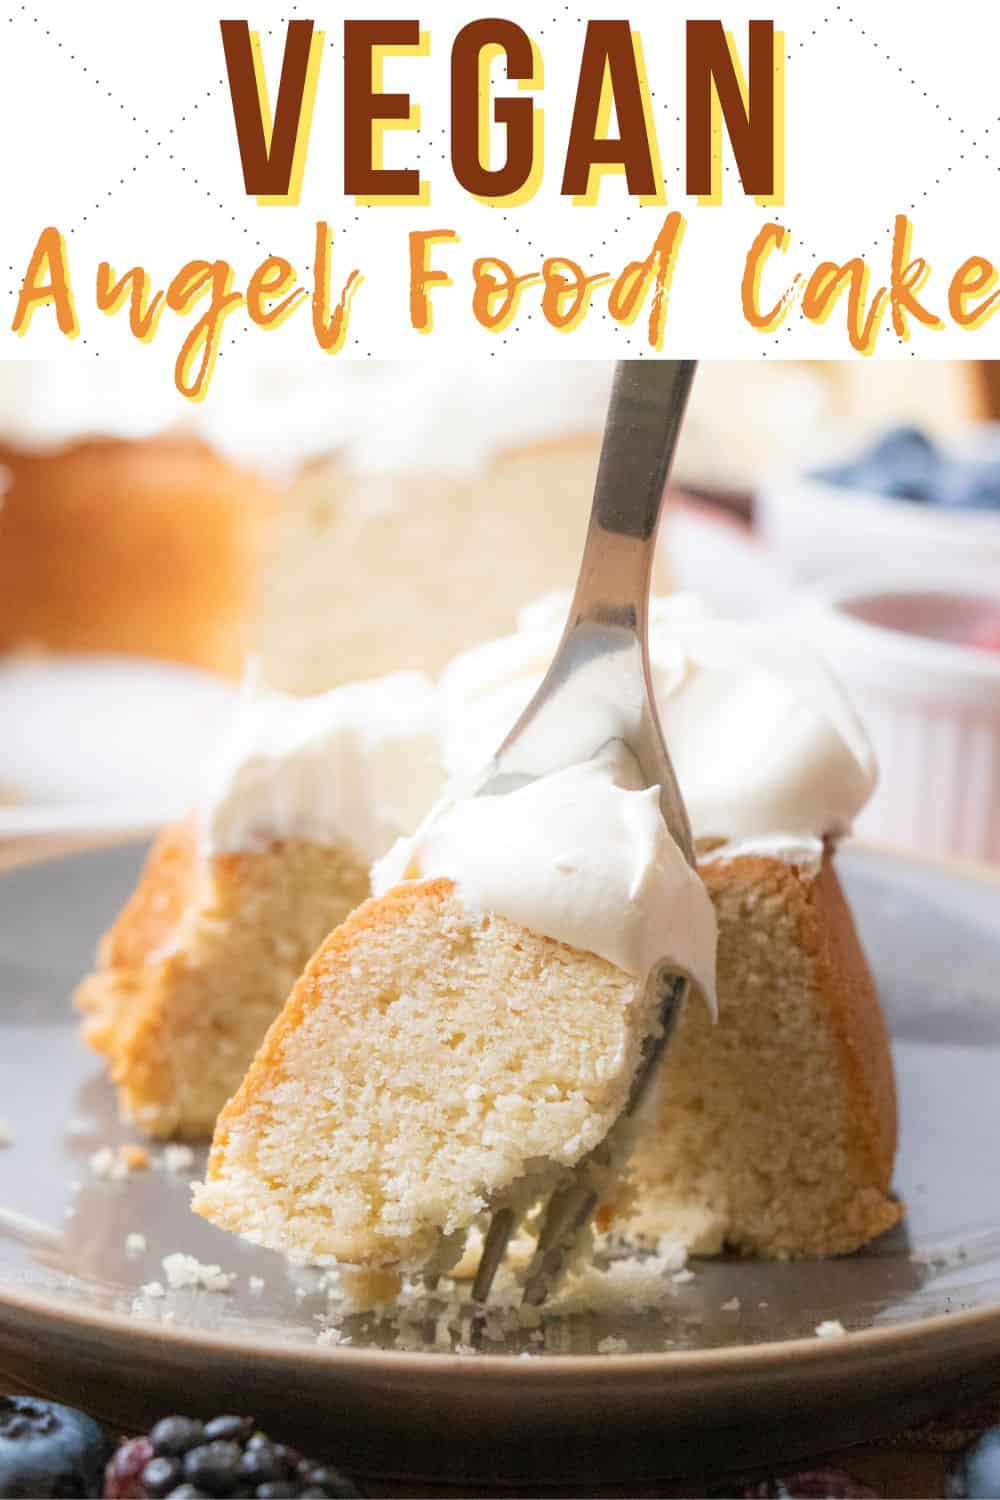 Vegan angel food cake recipe.